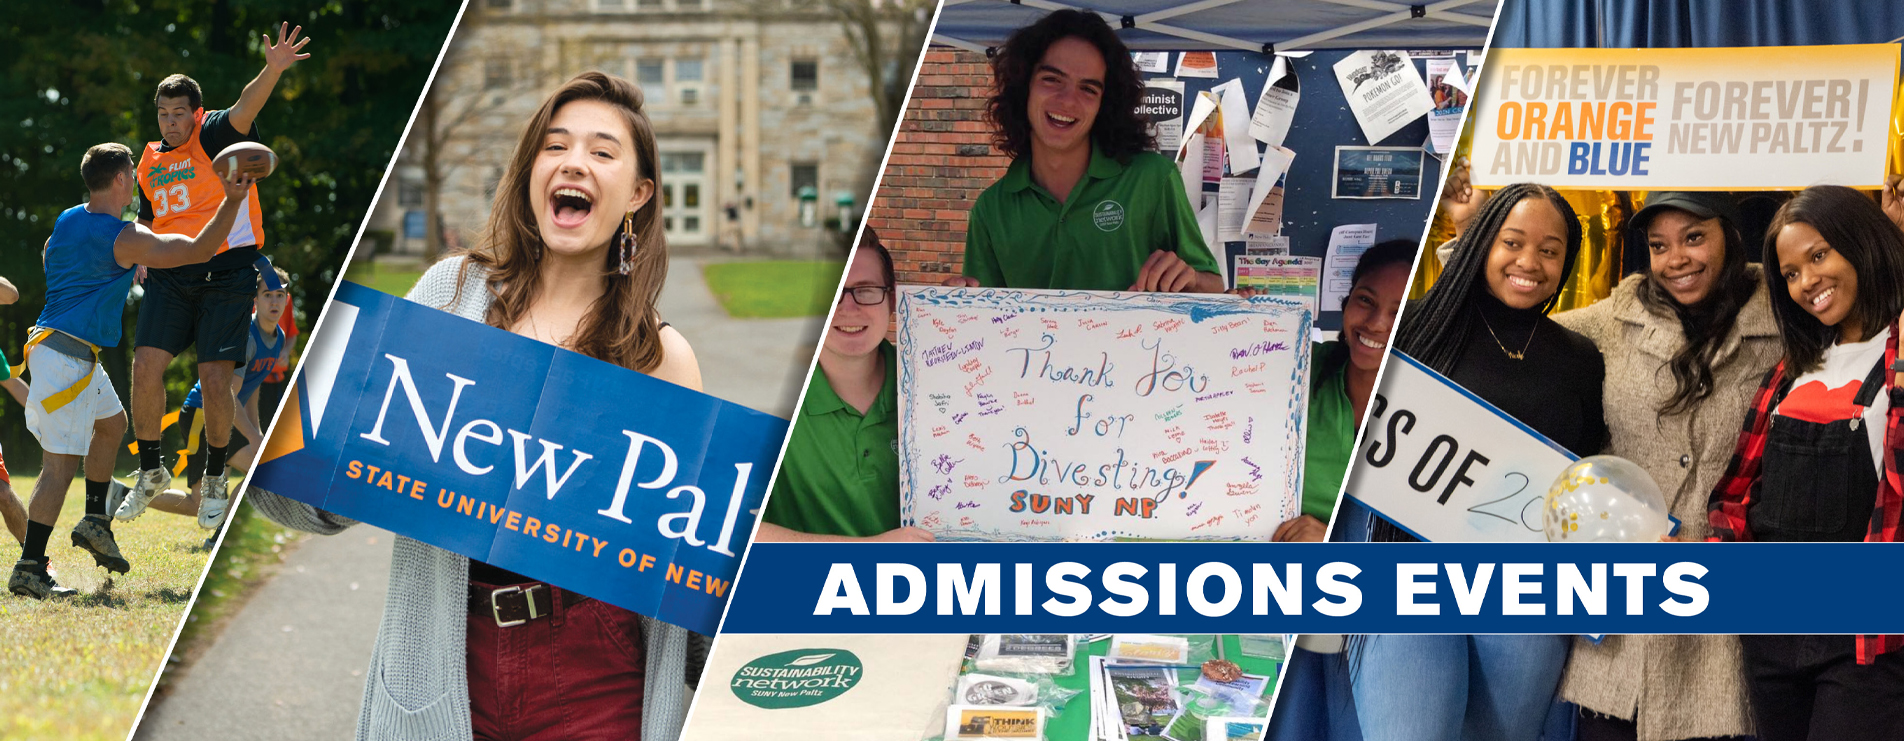 SUNY New Paltz Undergraduate Admissions